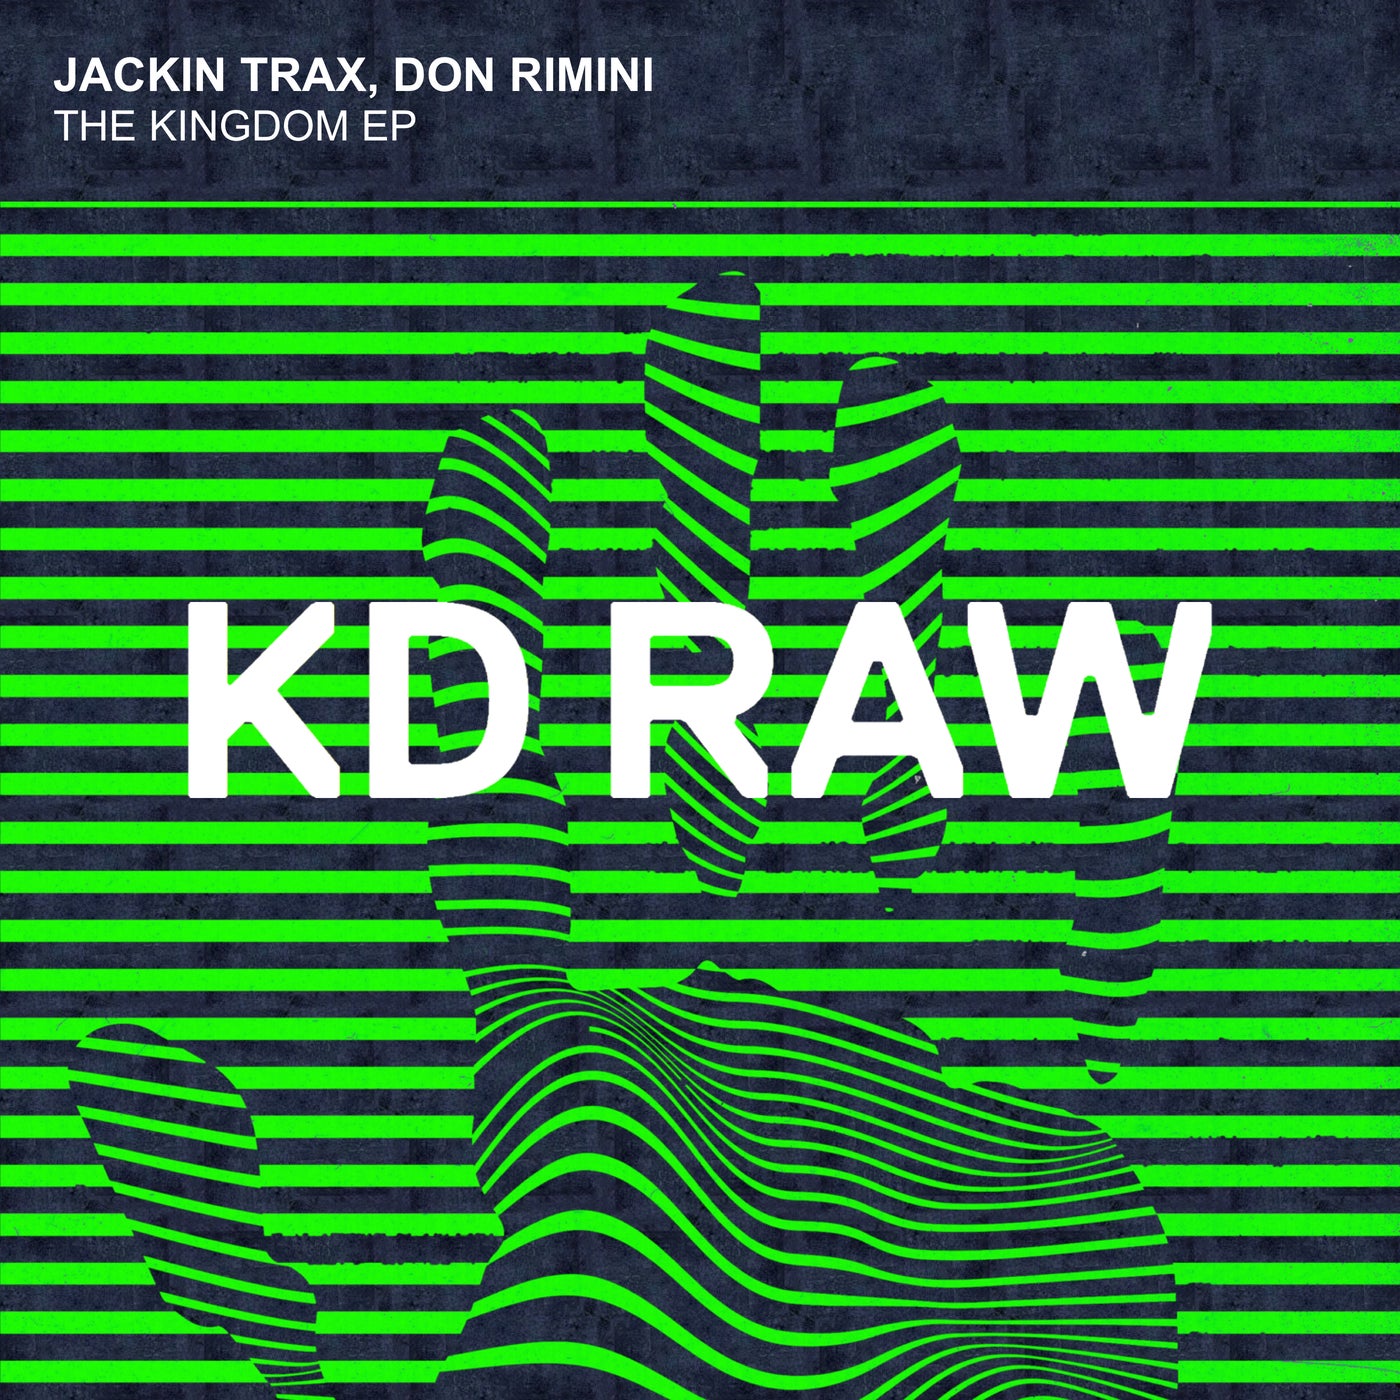 image cover: Don Rimini, Jackin Trax - Kingdom EP on KD RAW